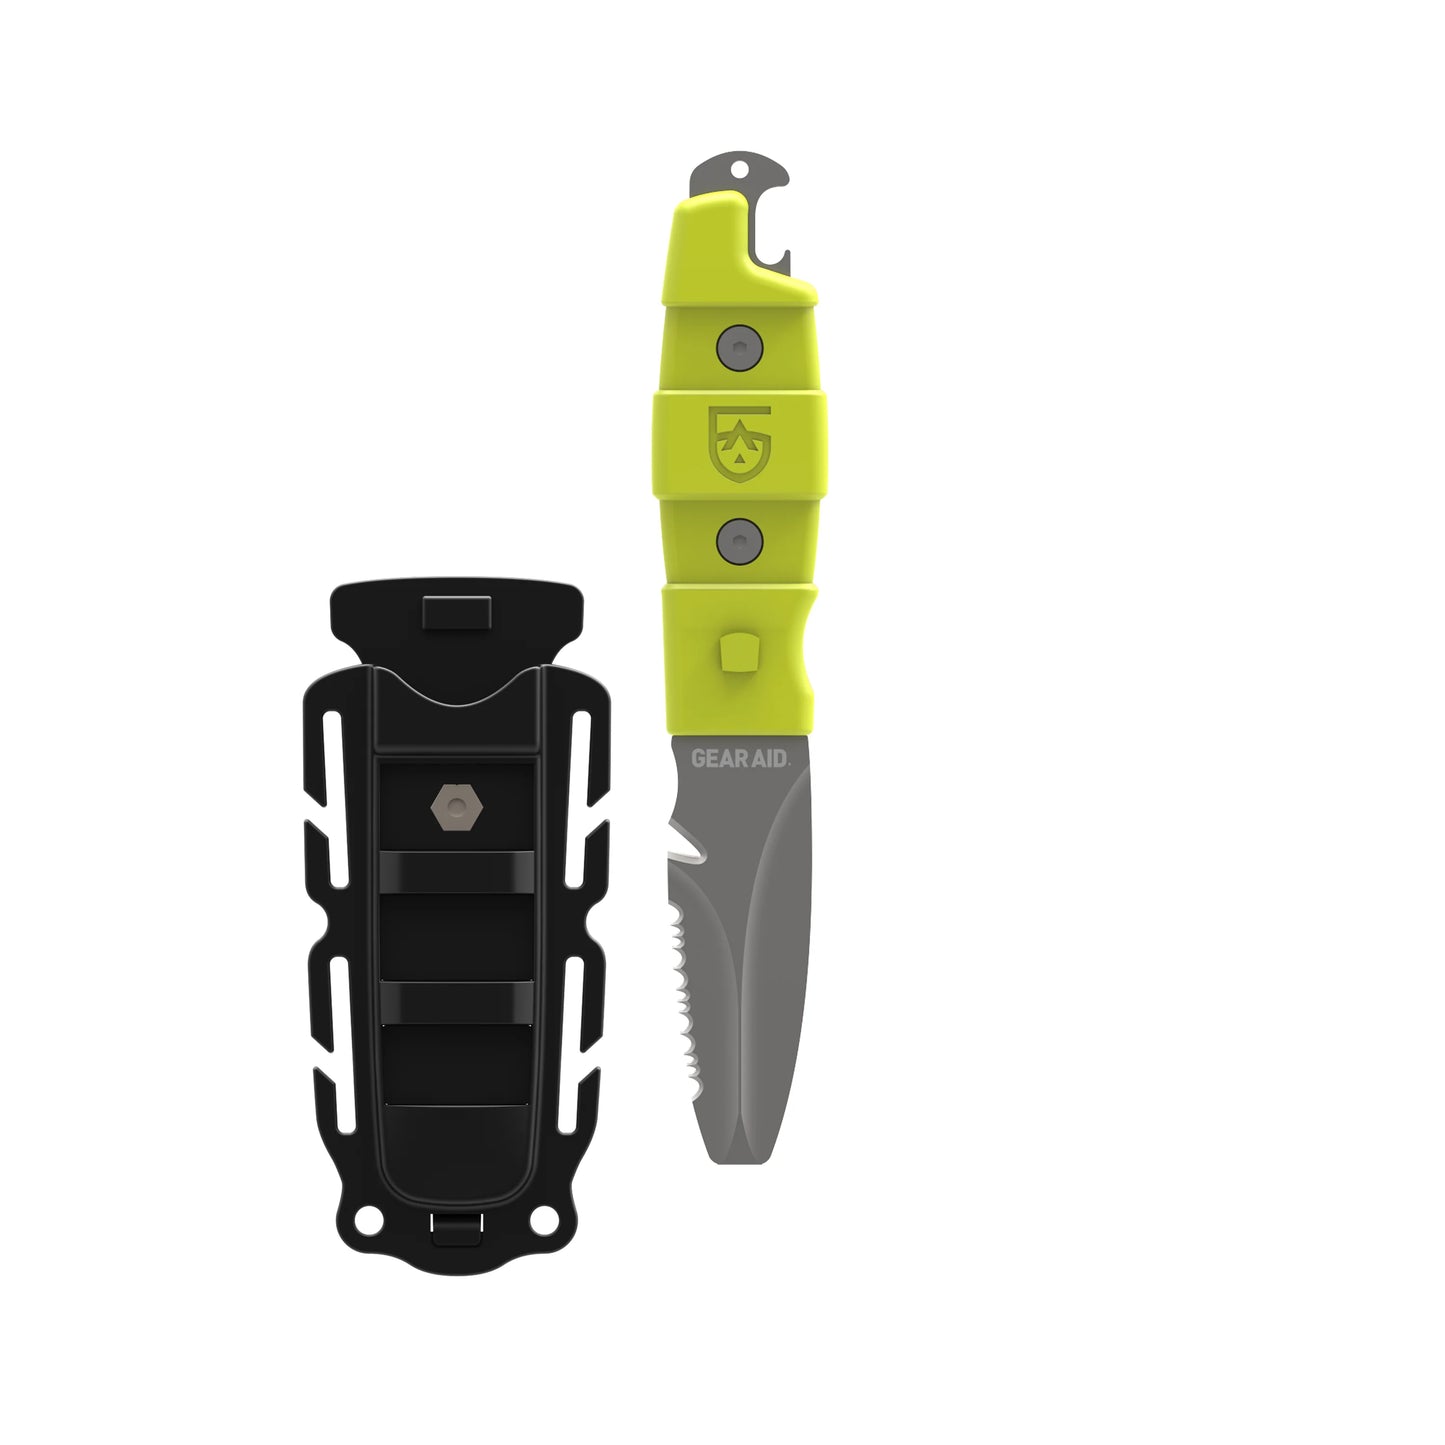 A Gear Aid Akua Knife with a green handle and a black handle.